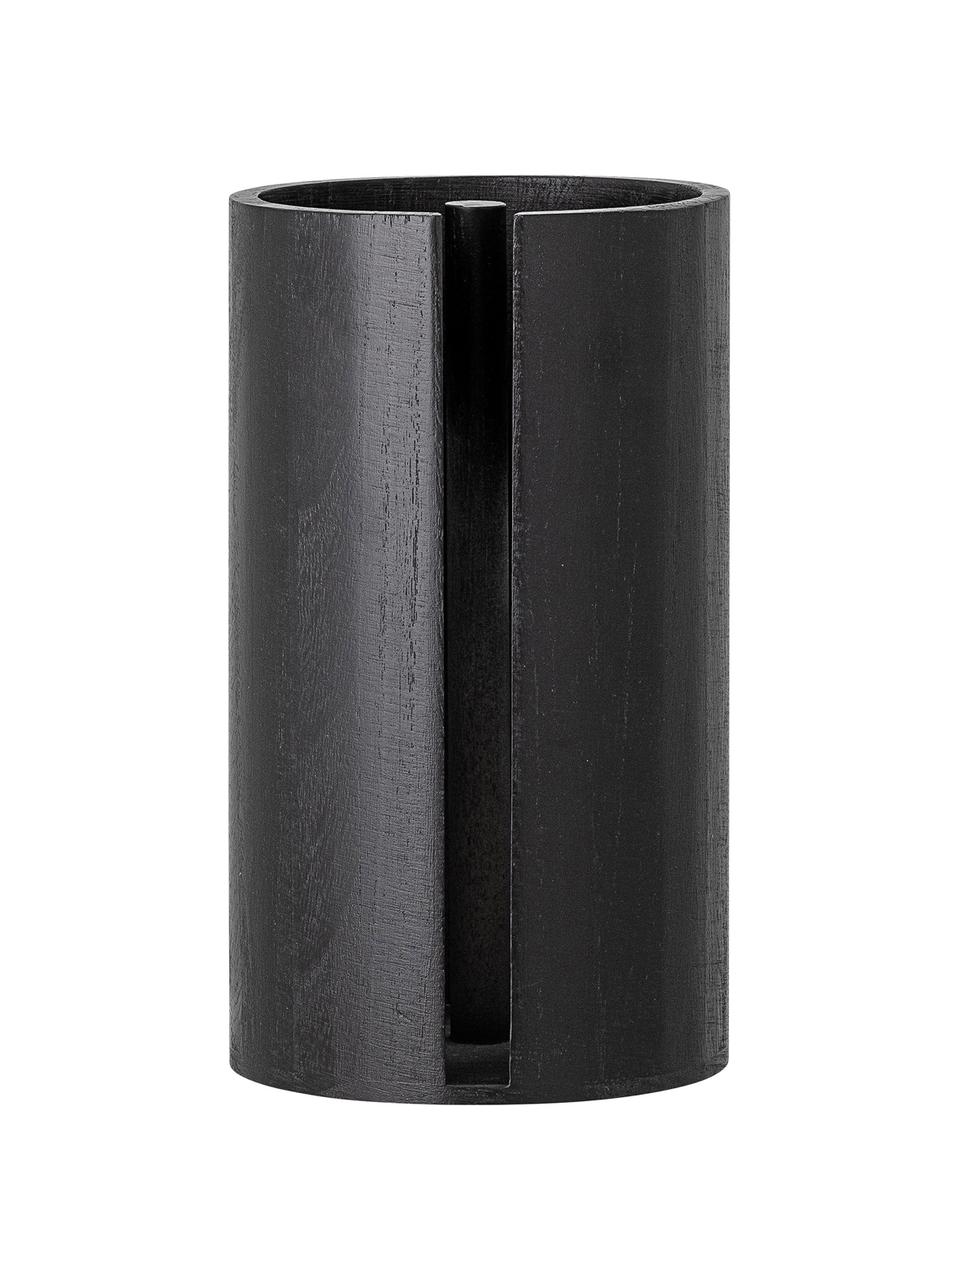 Küchenrollenhalter Stand aus Holz, Paulowniaholz, beschichtet, Schwarz, Ø 15 cm